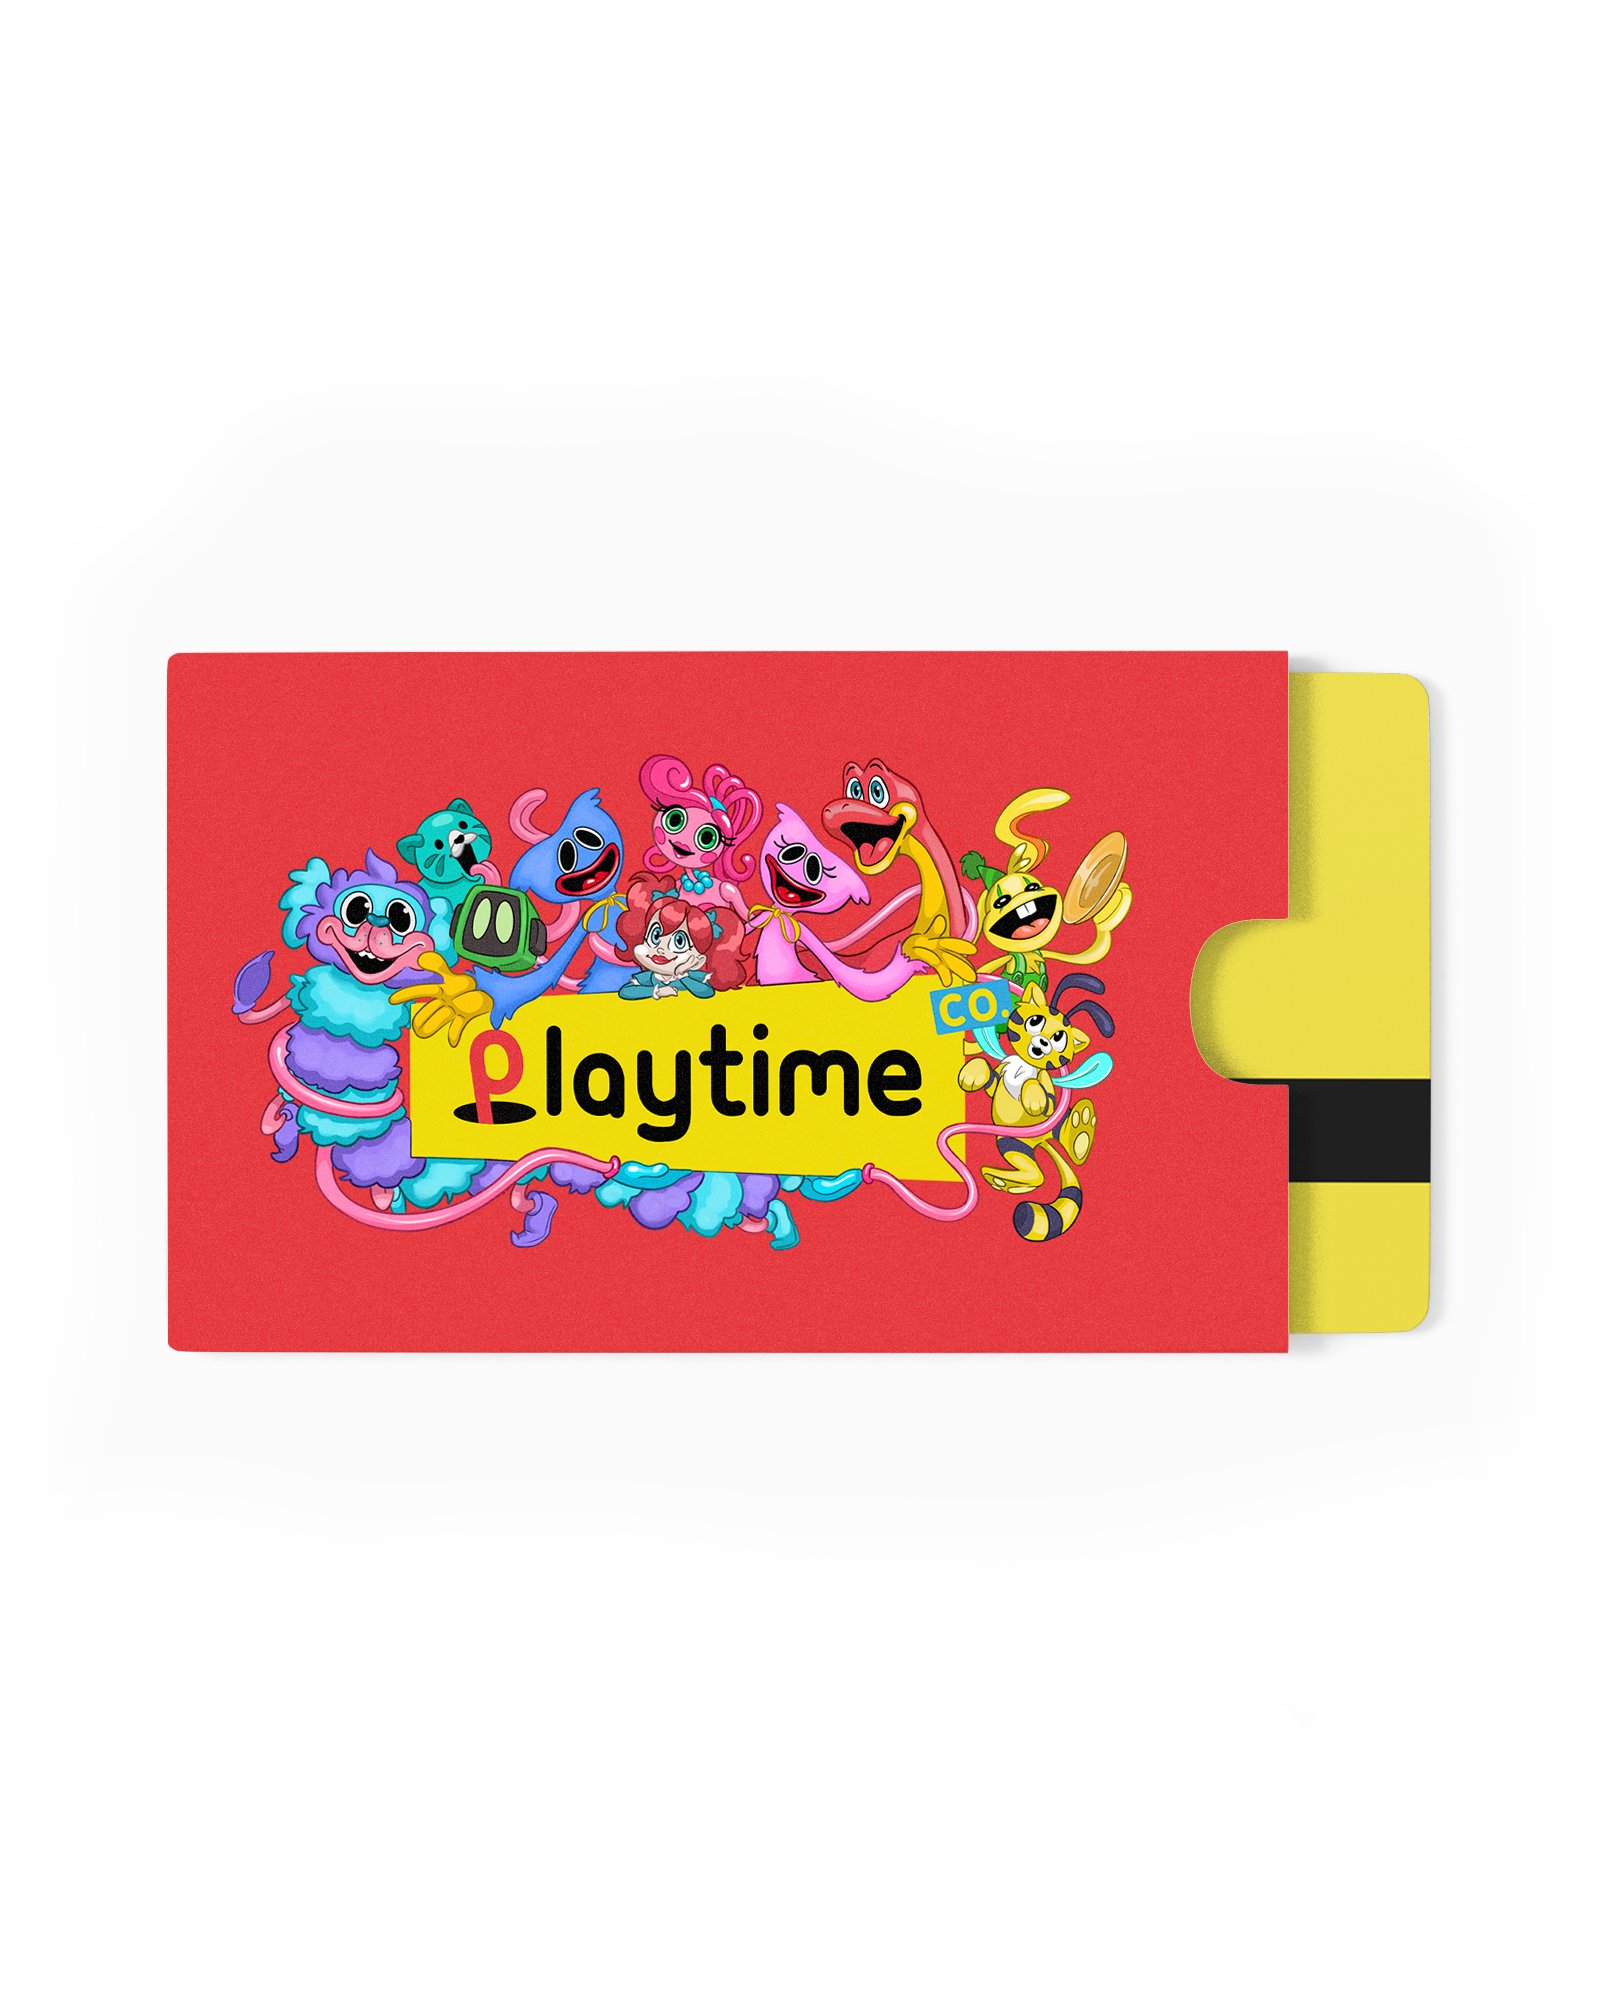 Kit Digital Poppy Playtime Exclusividade 300dpi